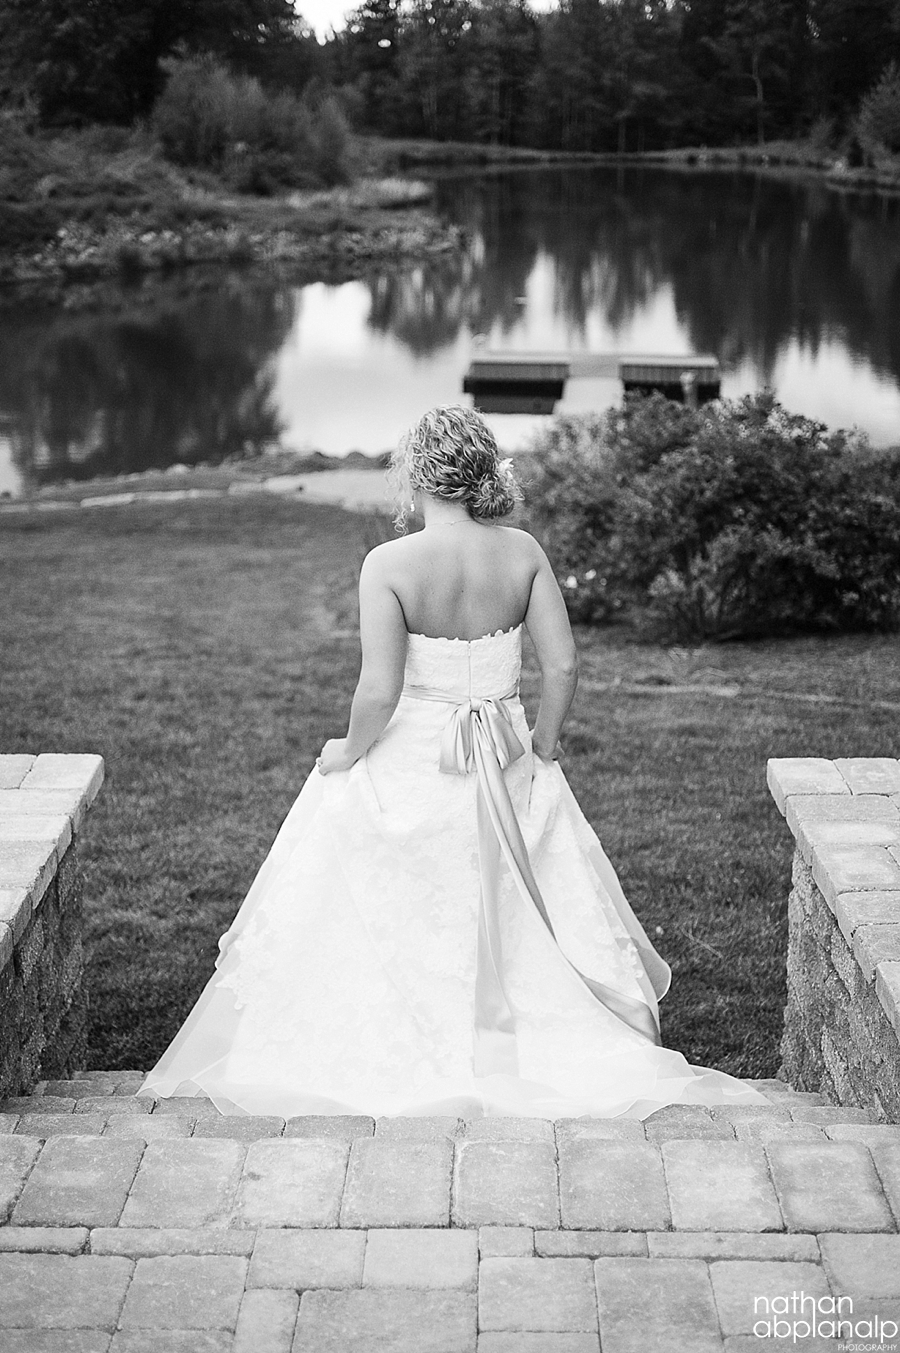 Bridals | 3/6 | Charlotte Wedding Photographer | Nathan Abplanalp